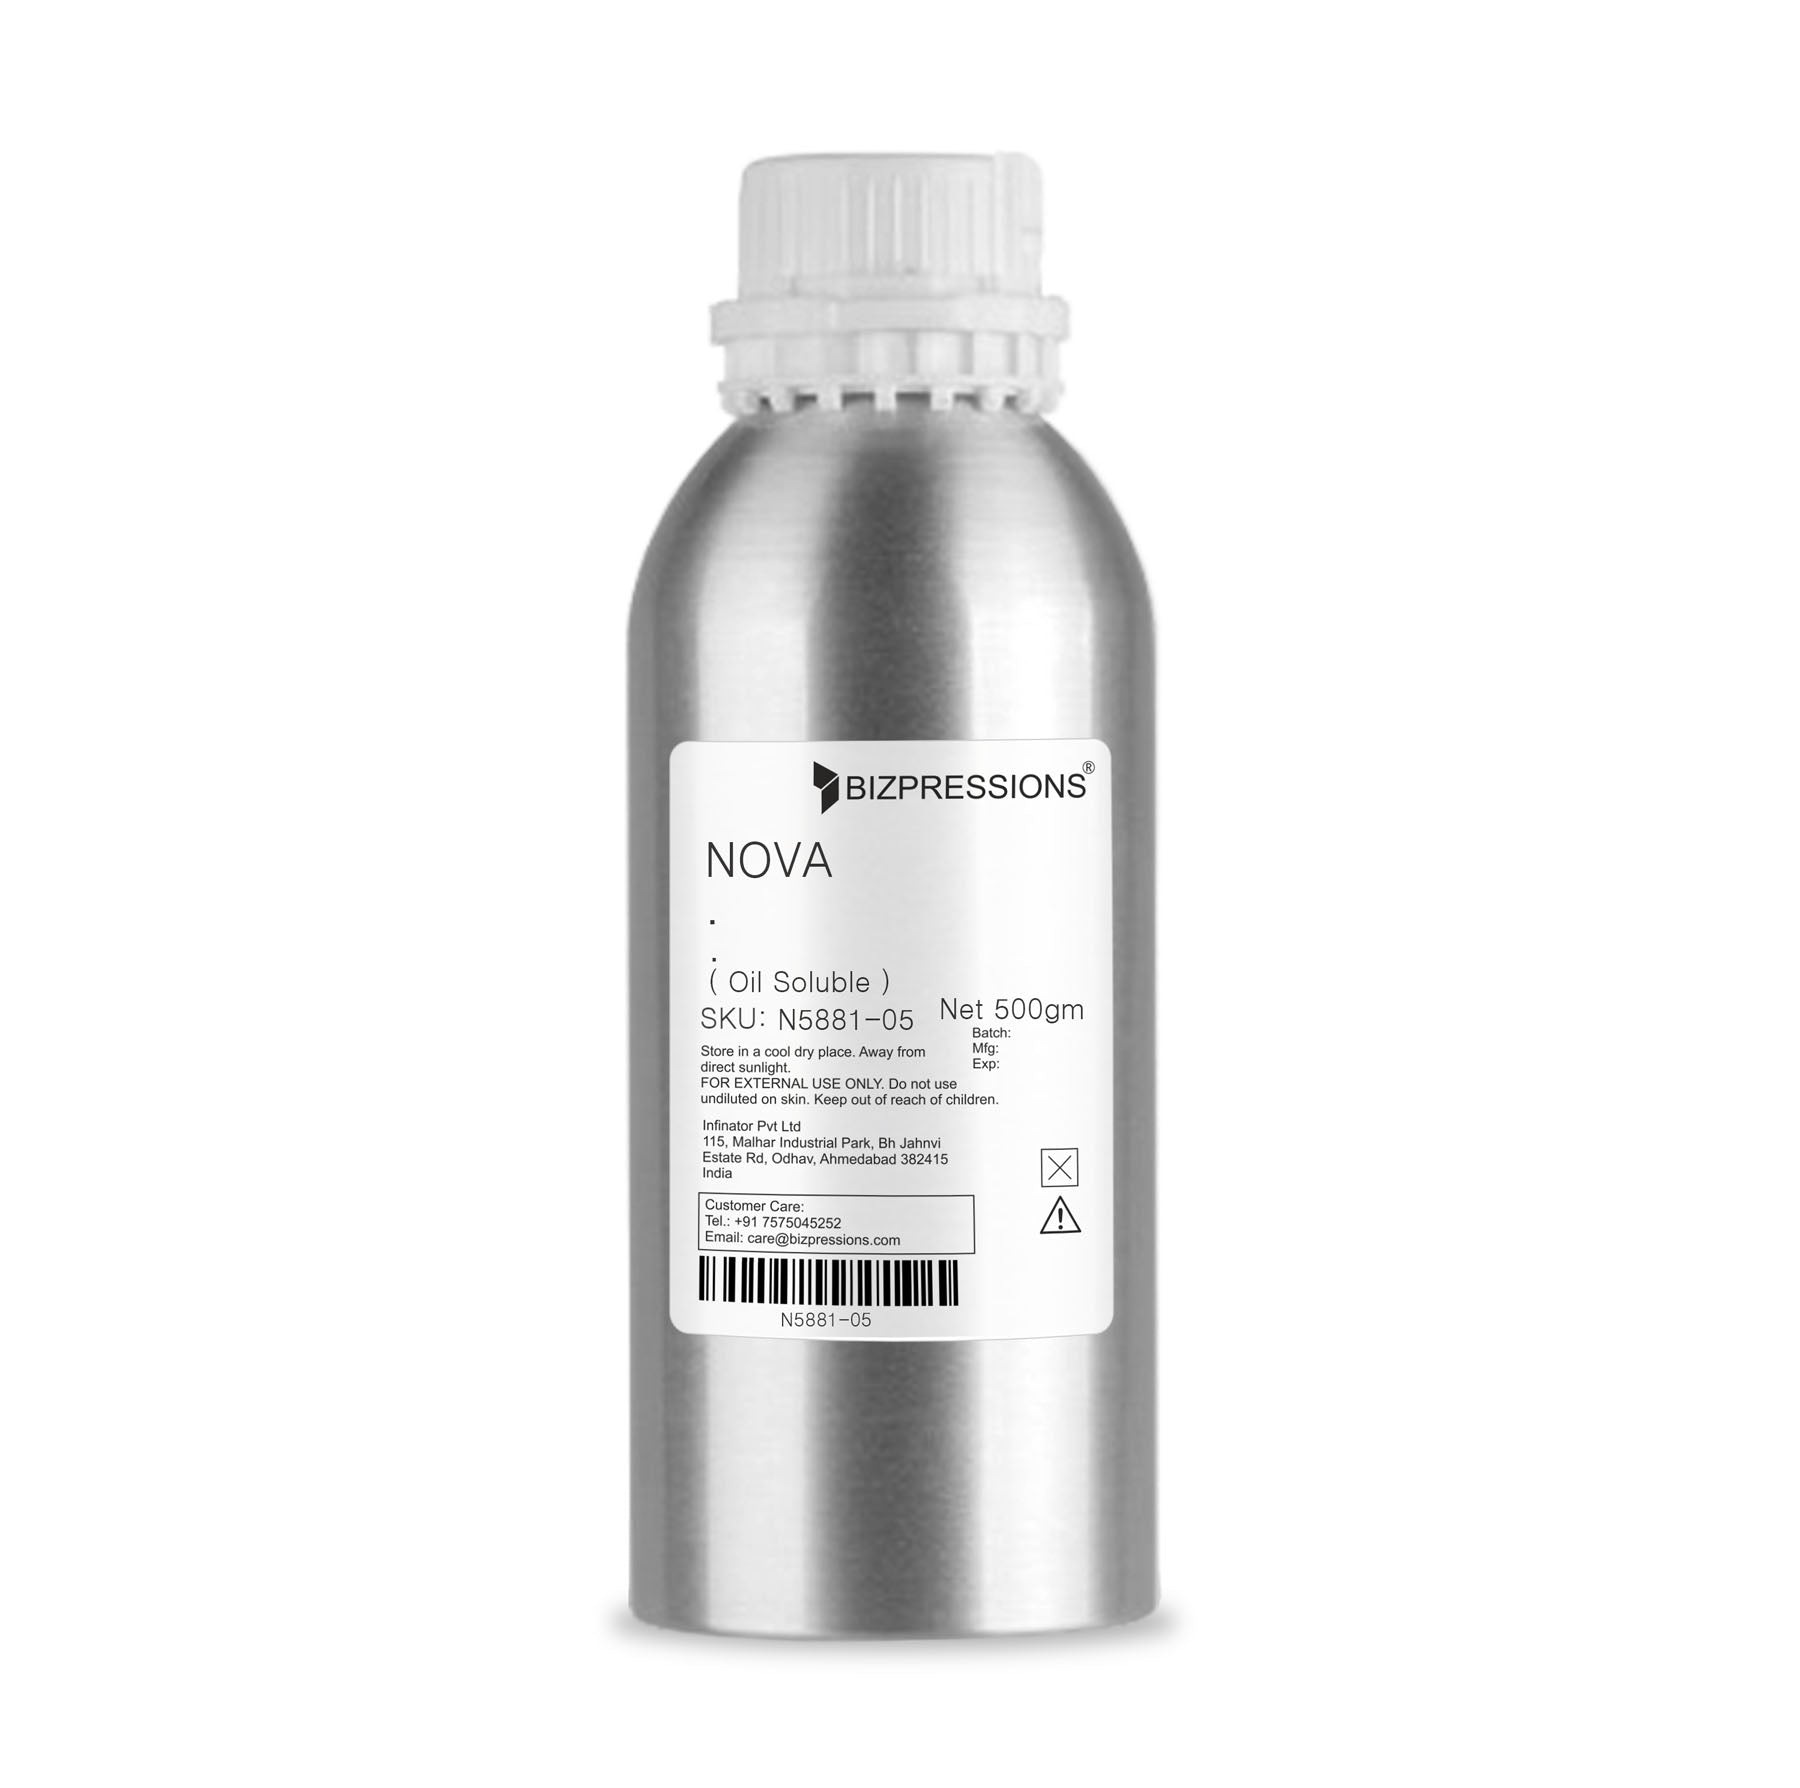 NOVA - Fragrance ( Oil Soluble ) - 500 gm